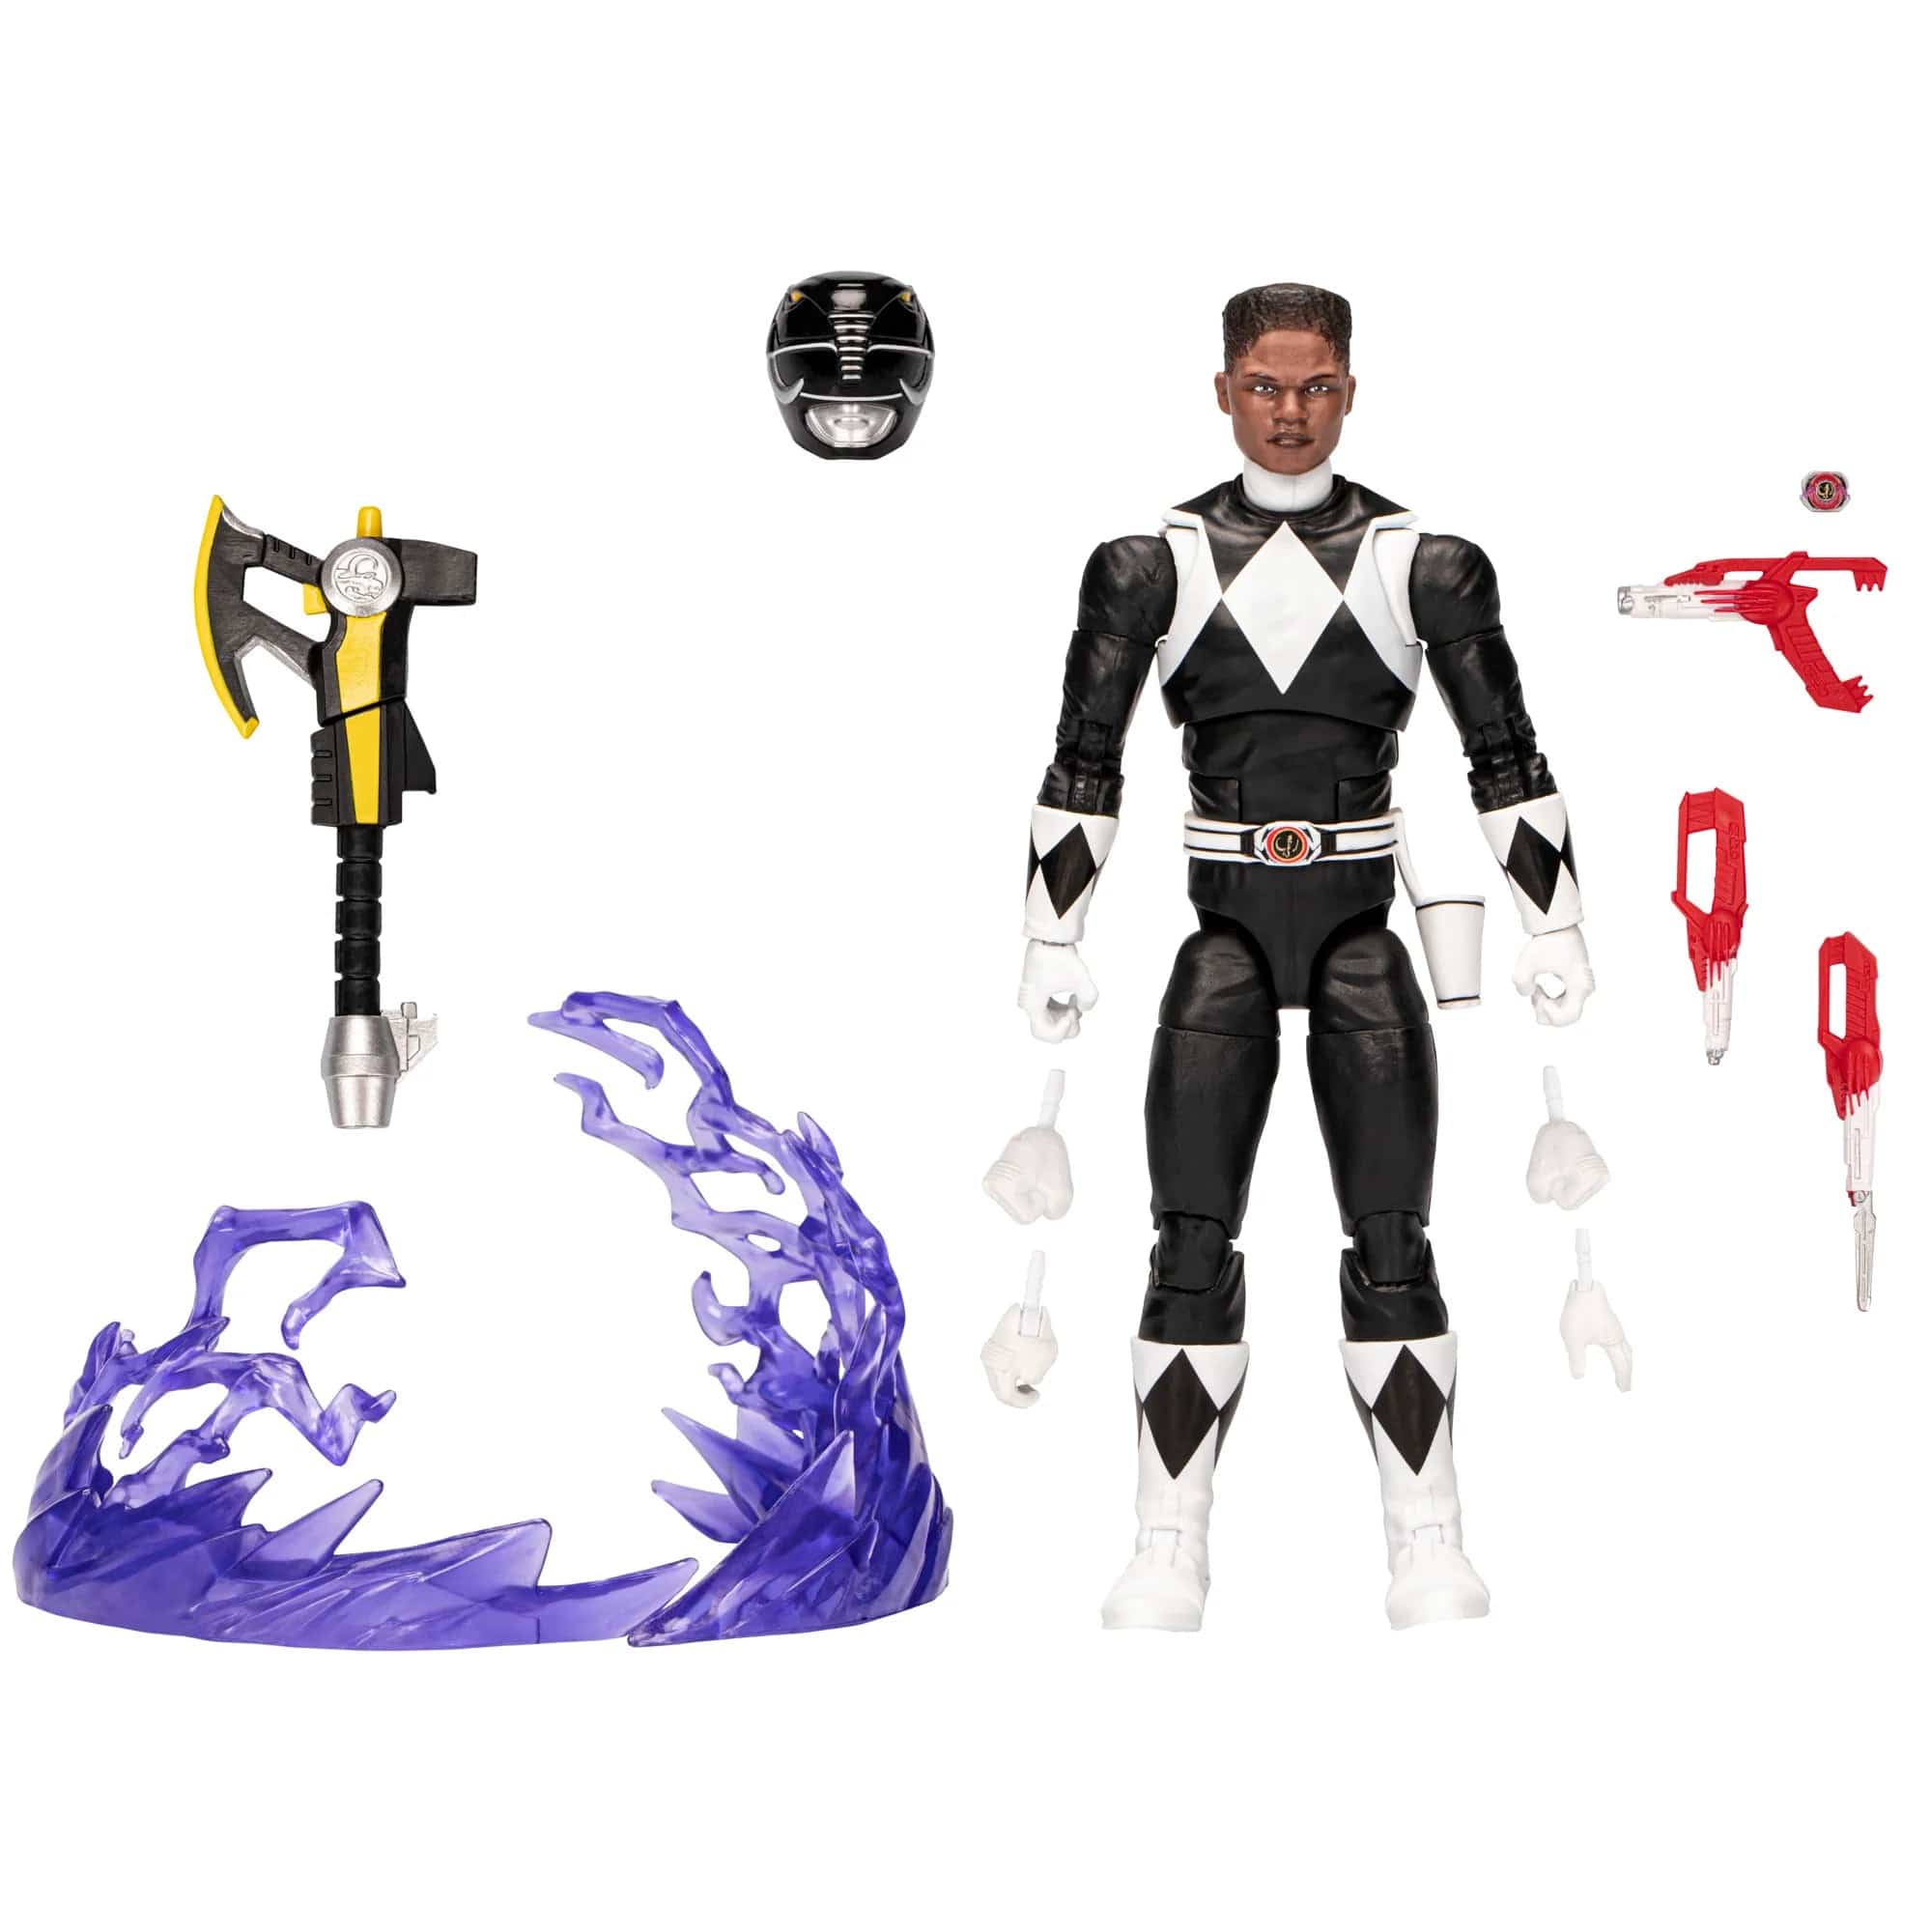 Power Rangers Lightning Collection Remastered Mighty Morphin Black Ranger